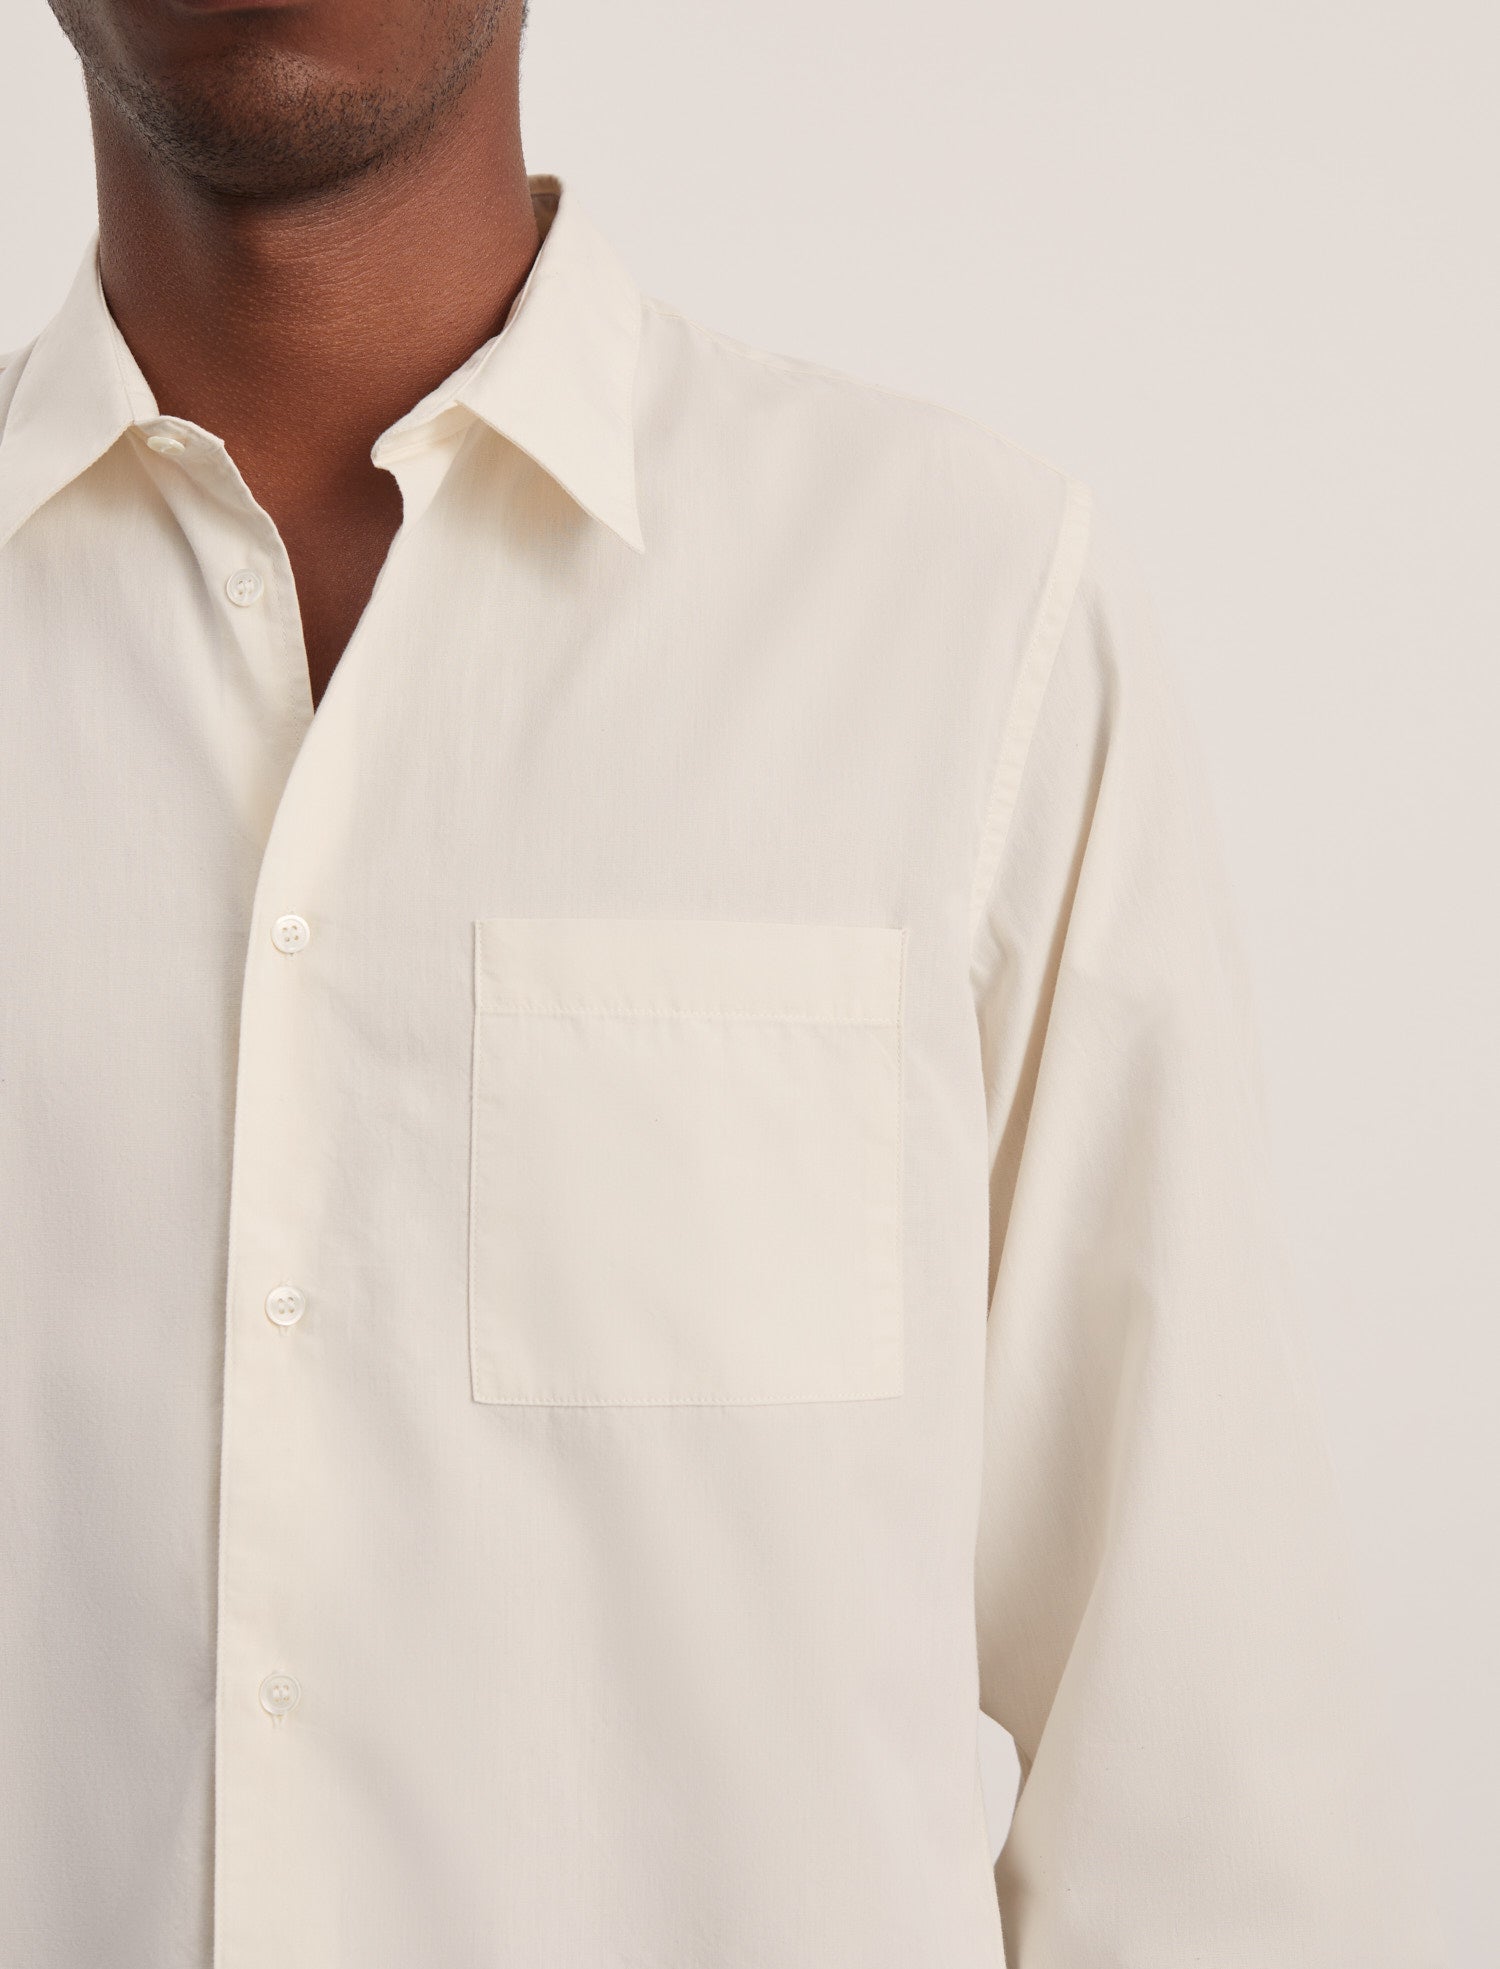 ANOTHER Shirt 3.0, Wimbledon White